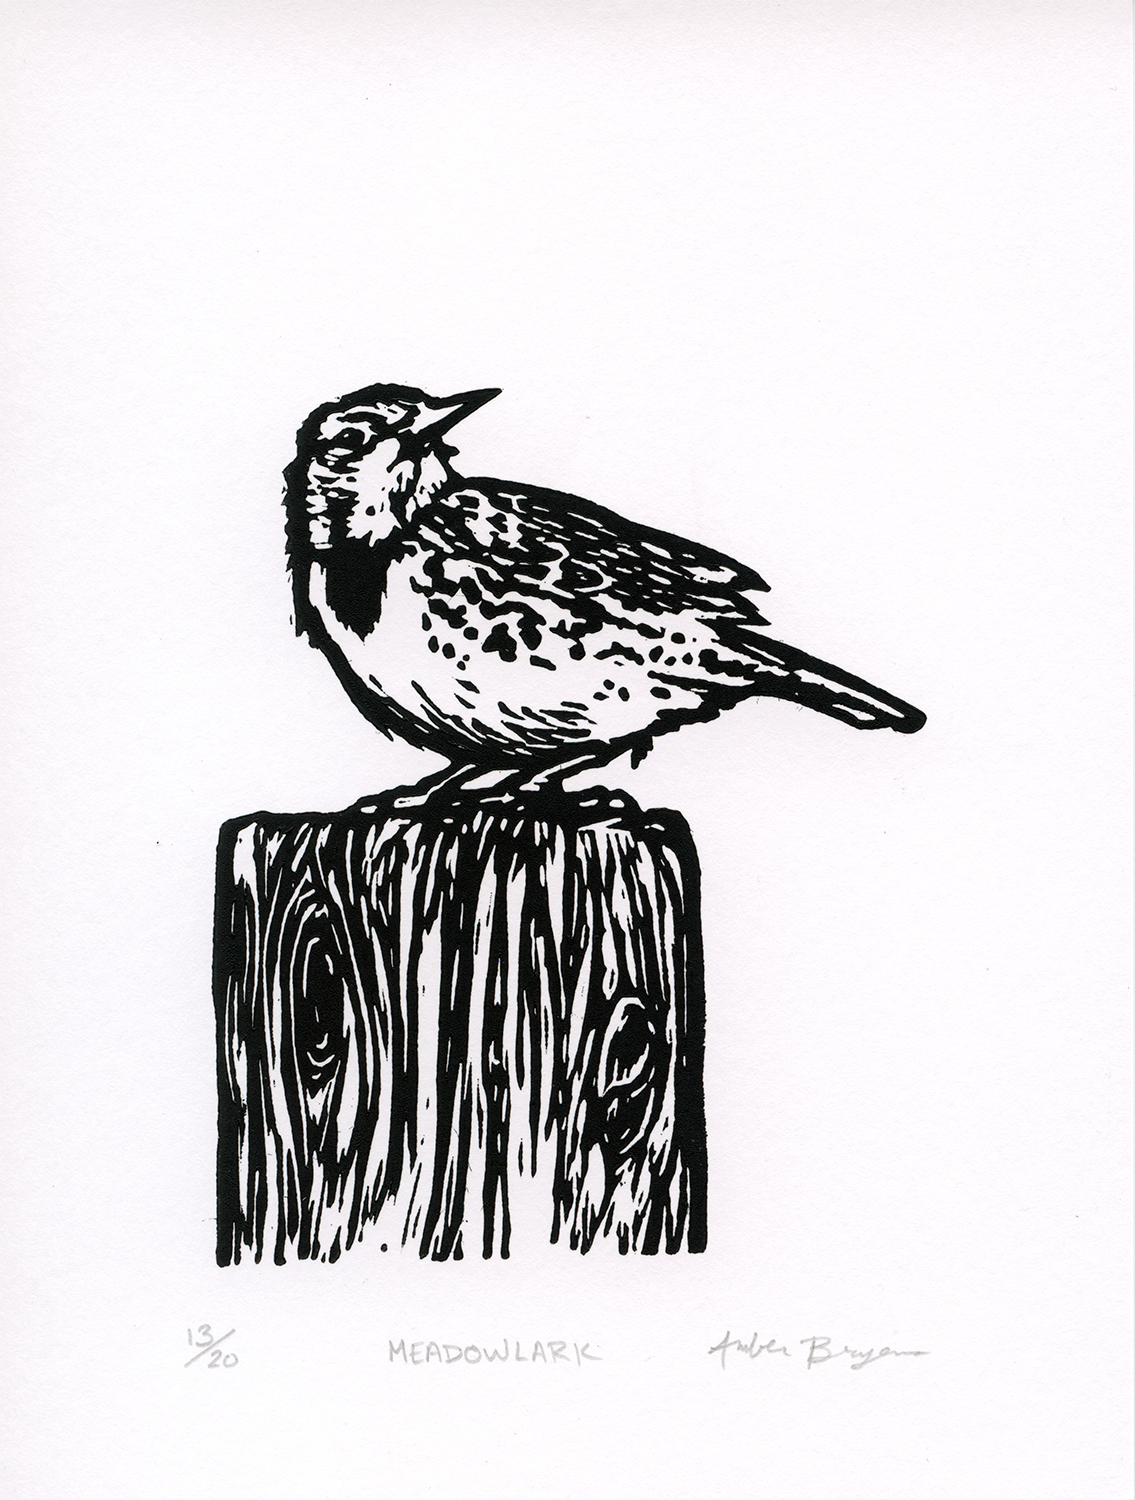 Meadowlark linocut print